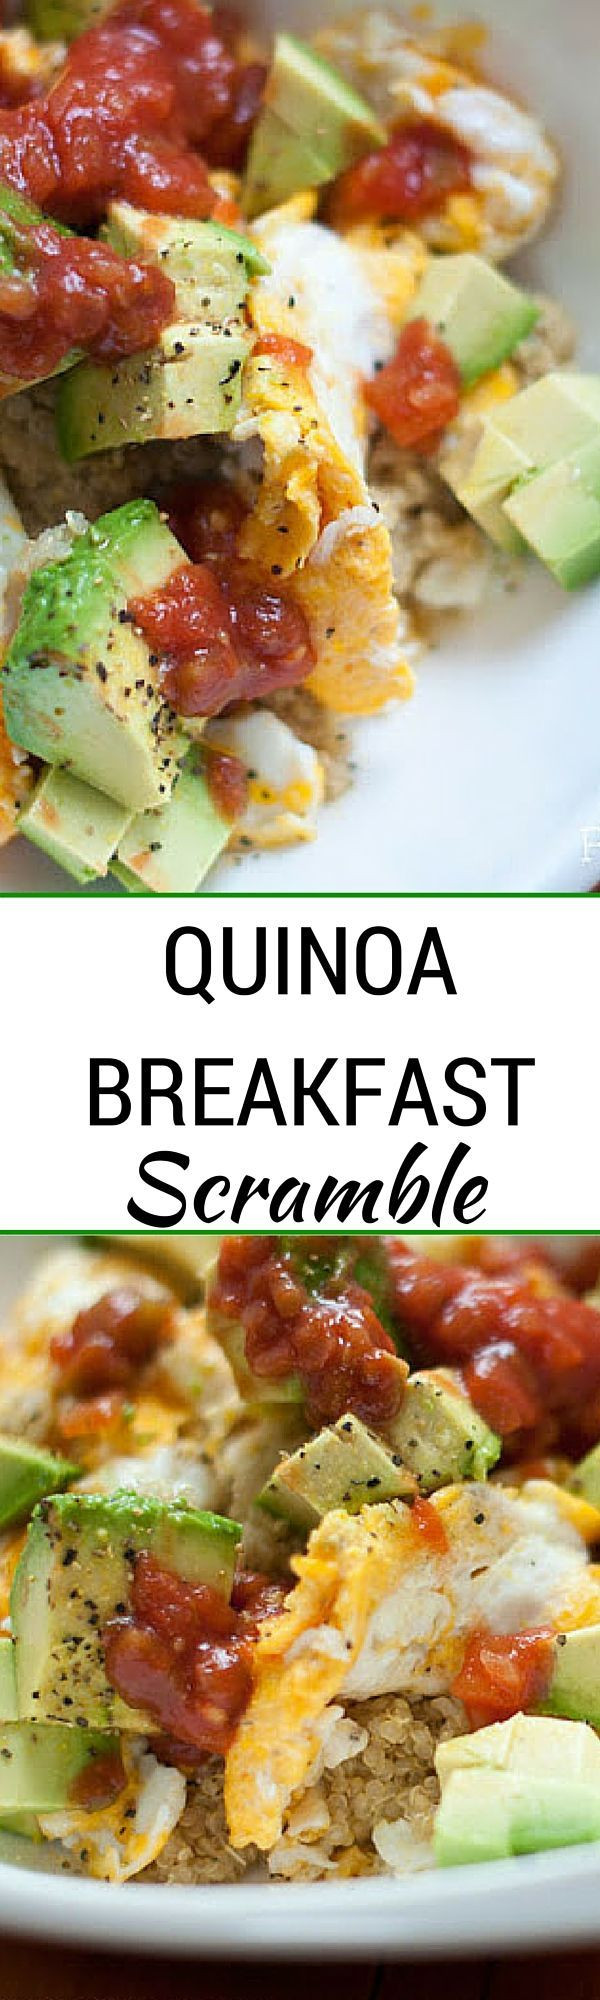 Clean Eating Recipes Breakfast
 Quinoa Breakfast Scramble Recipe